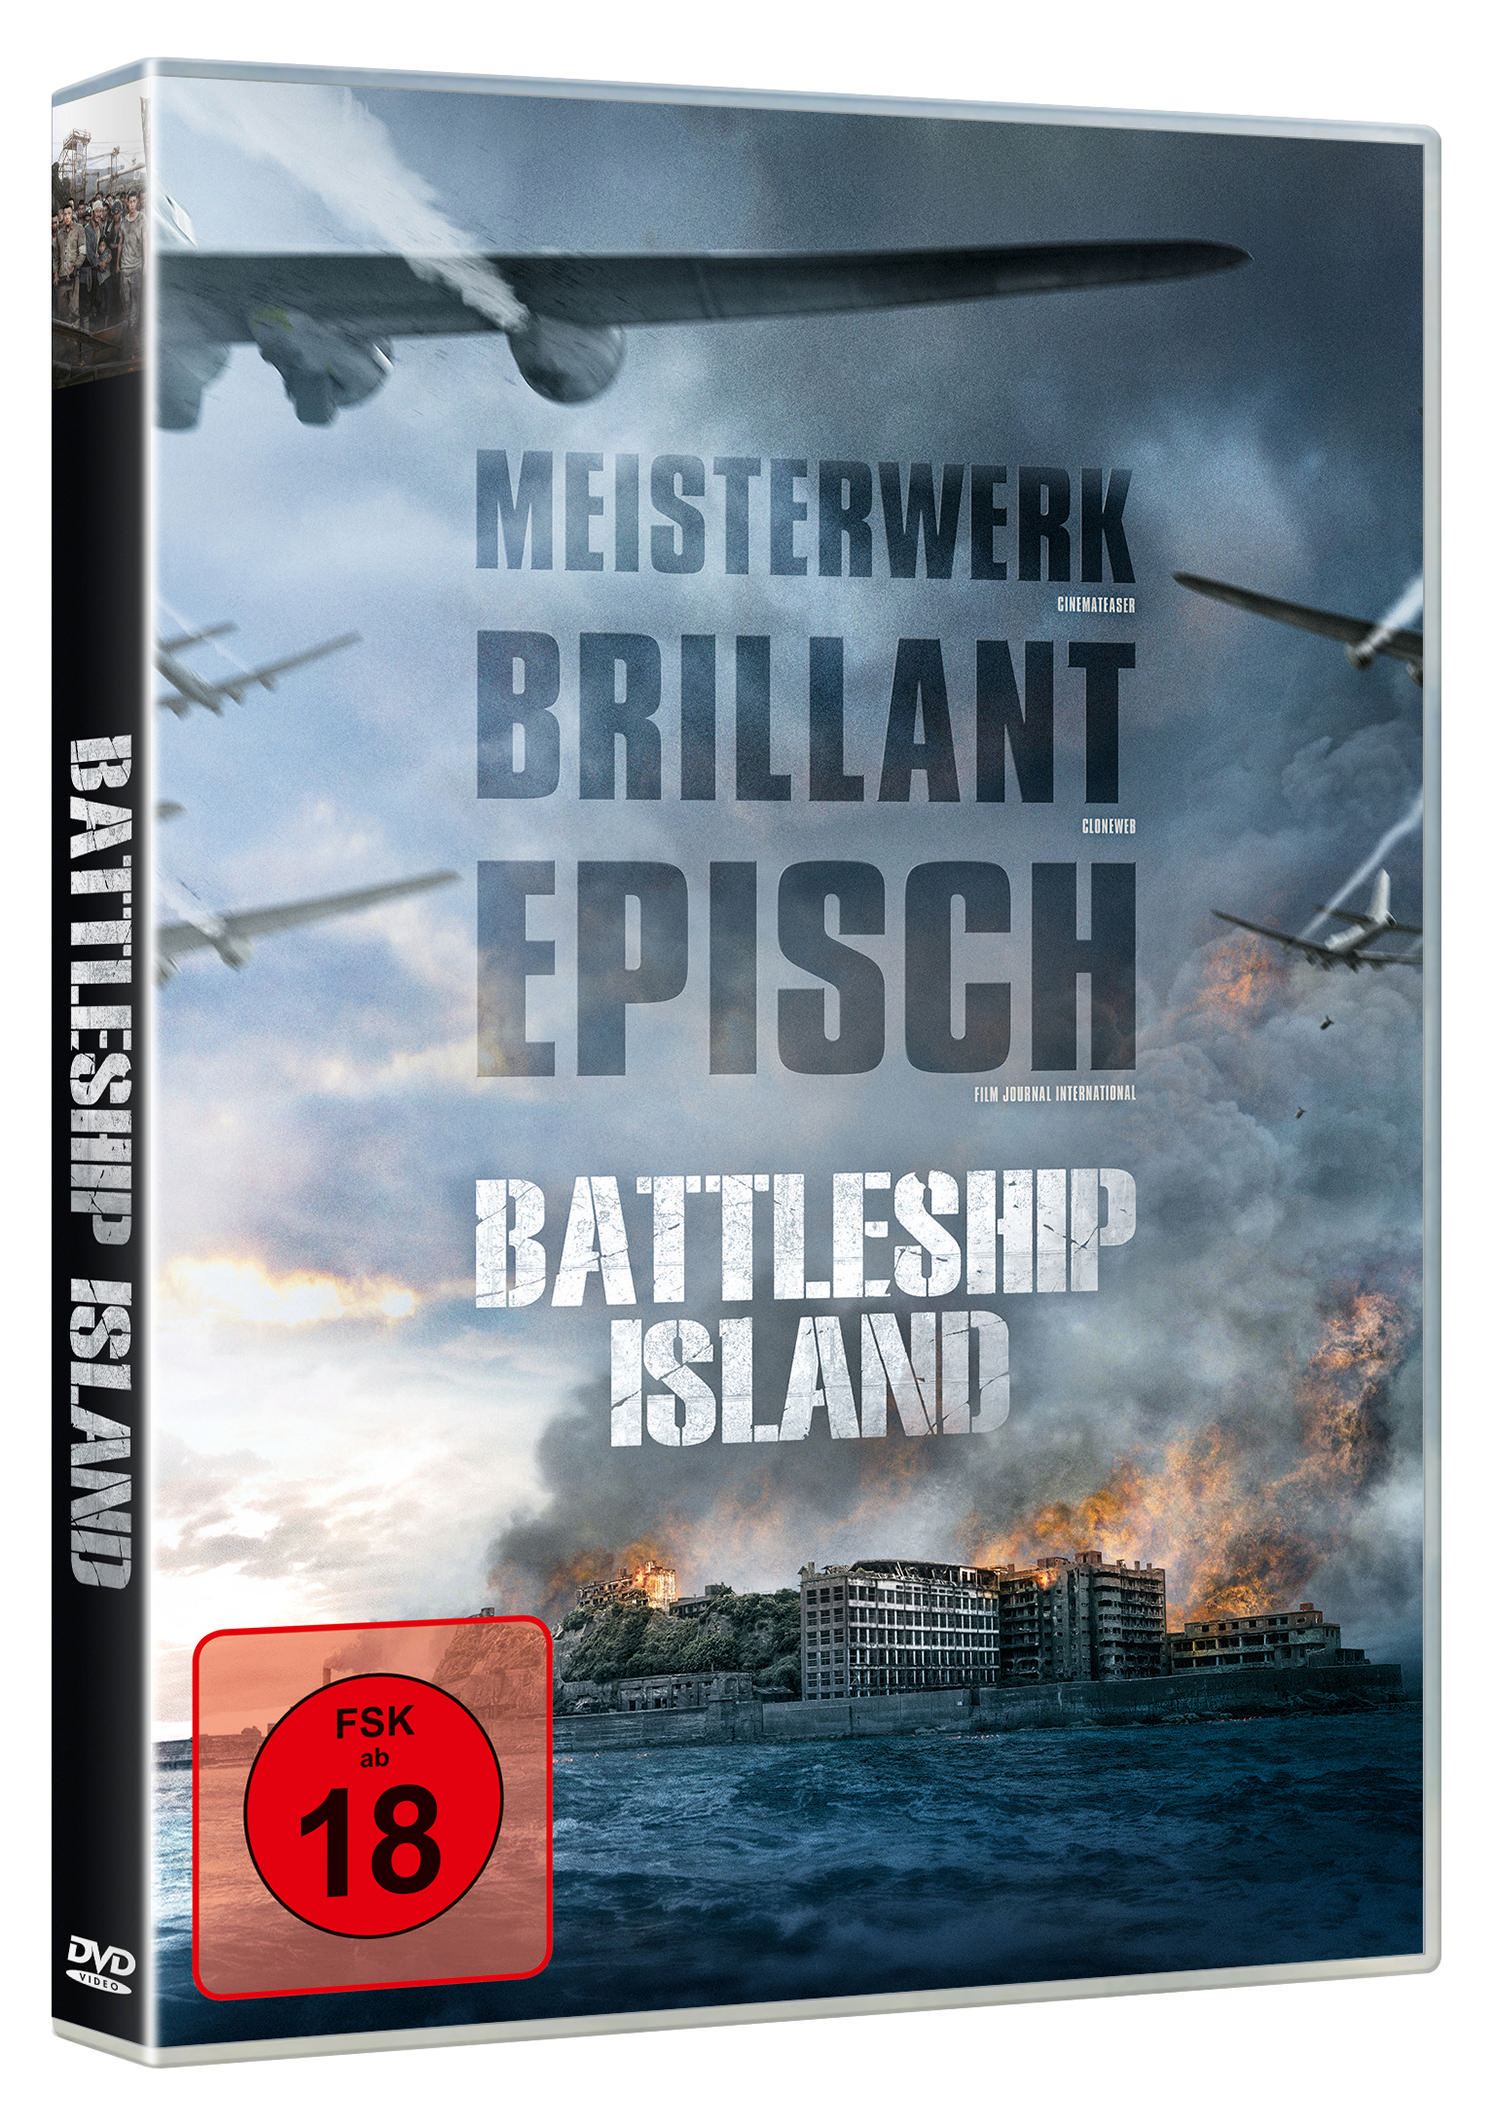 BATTLESHIP ISLAND DVD